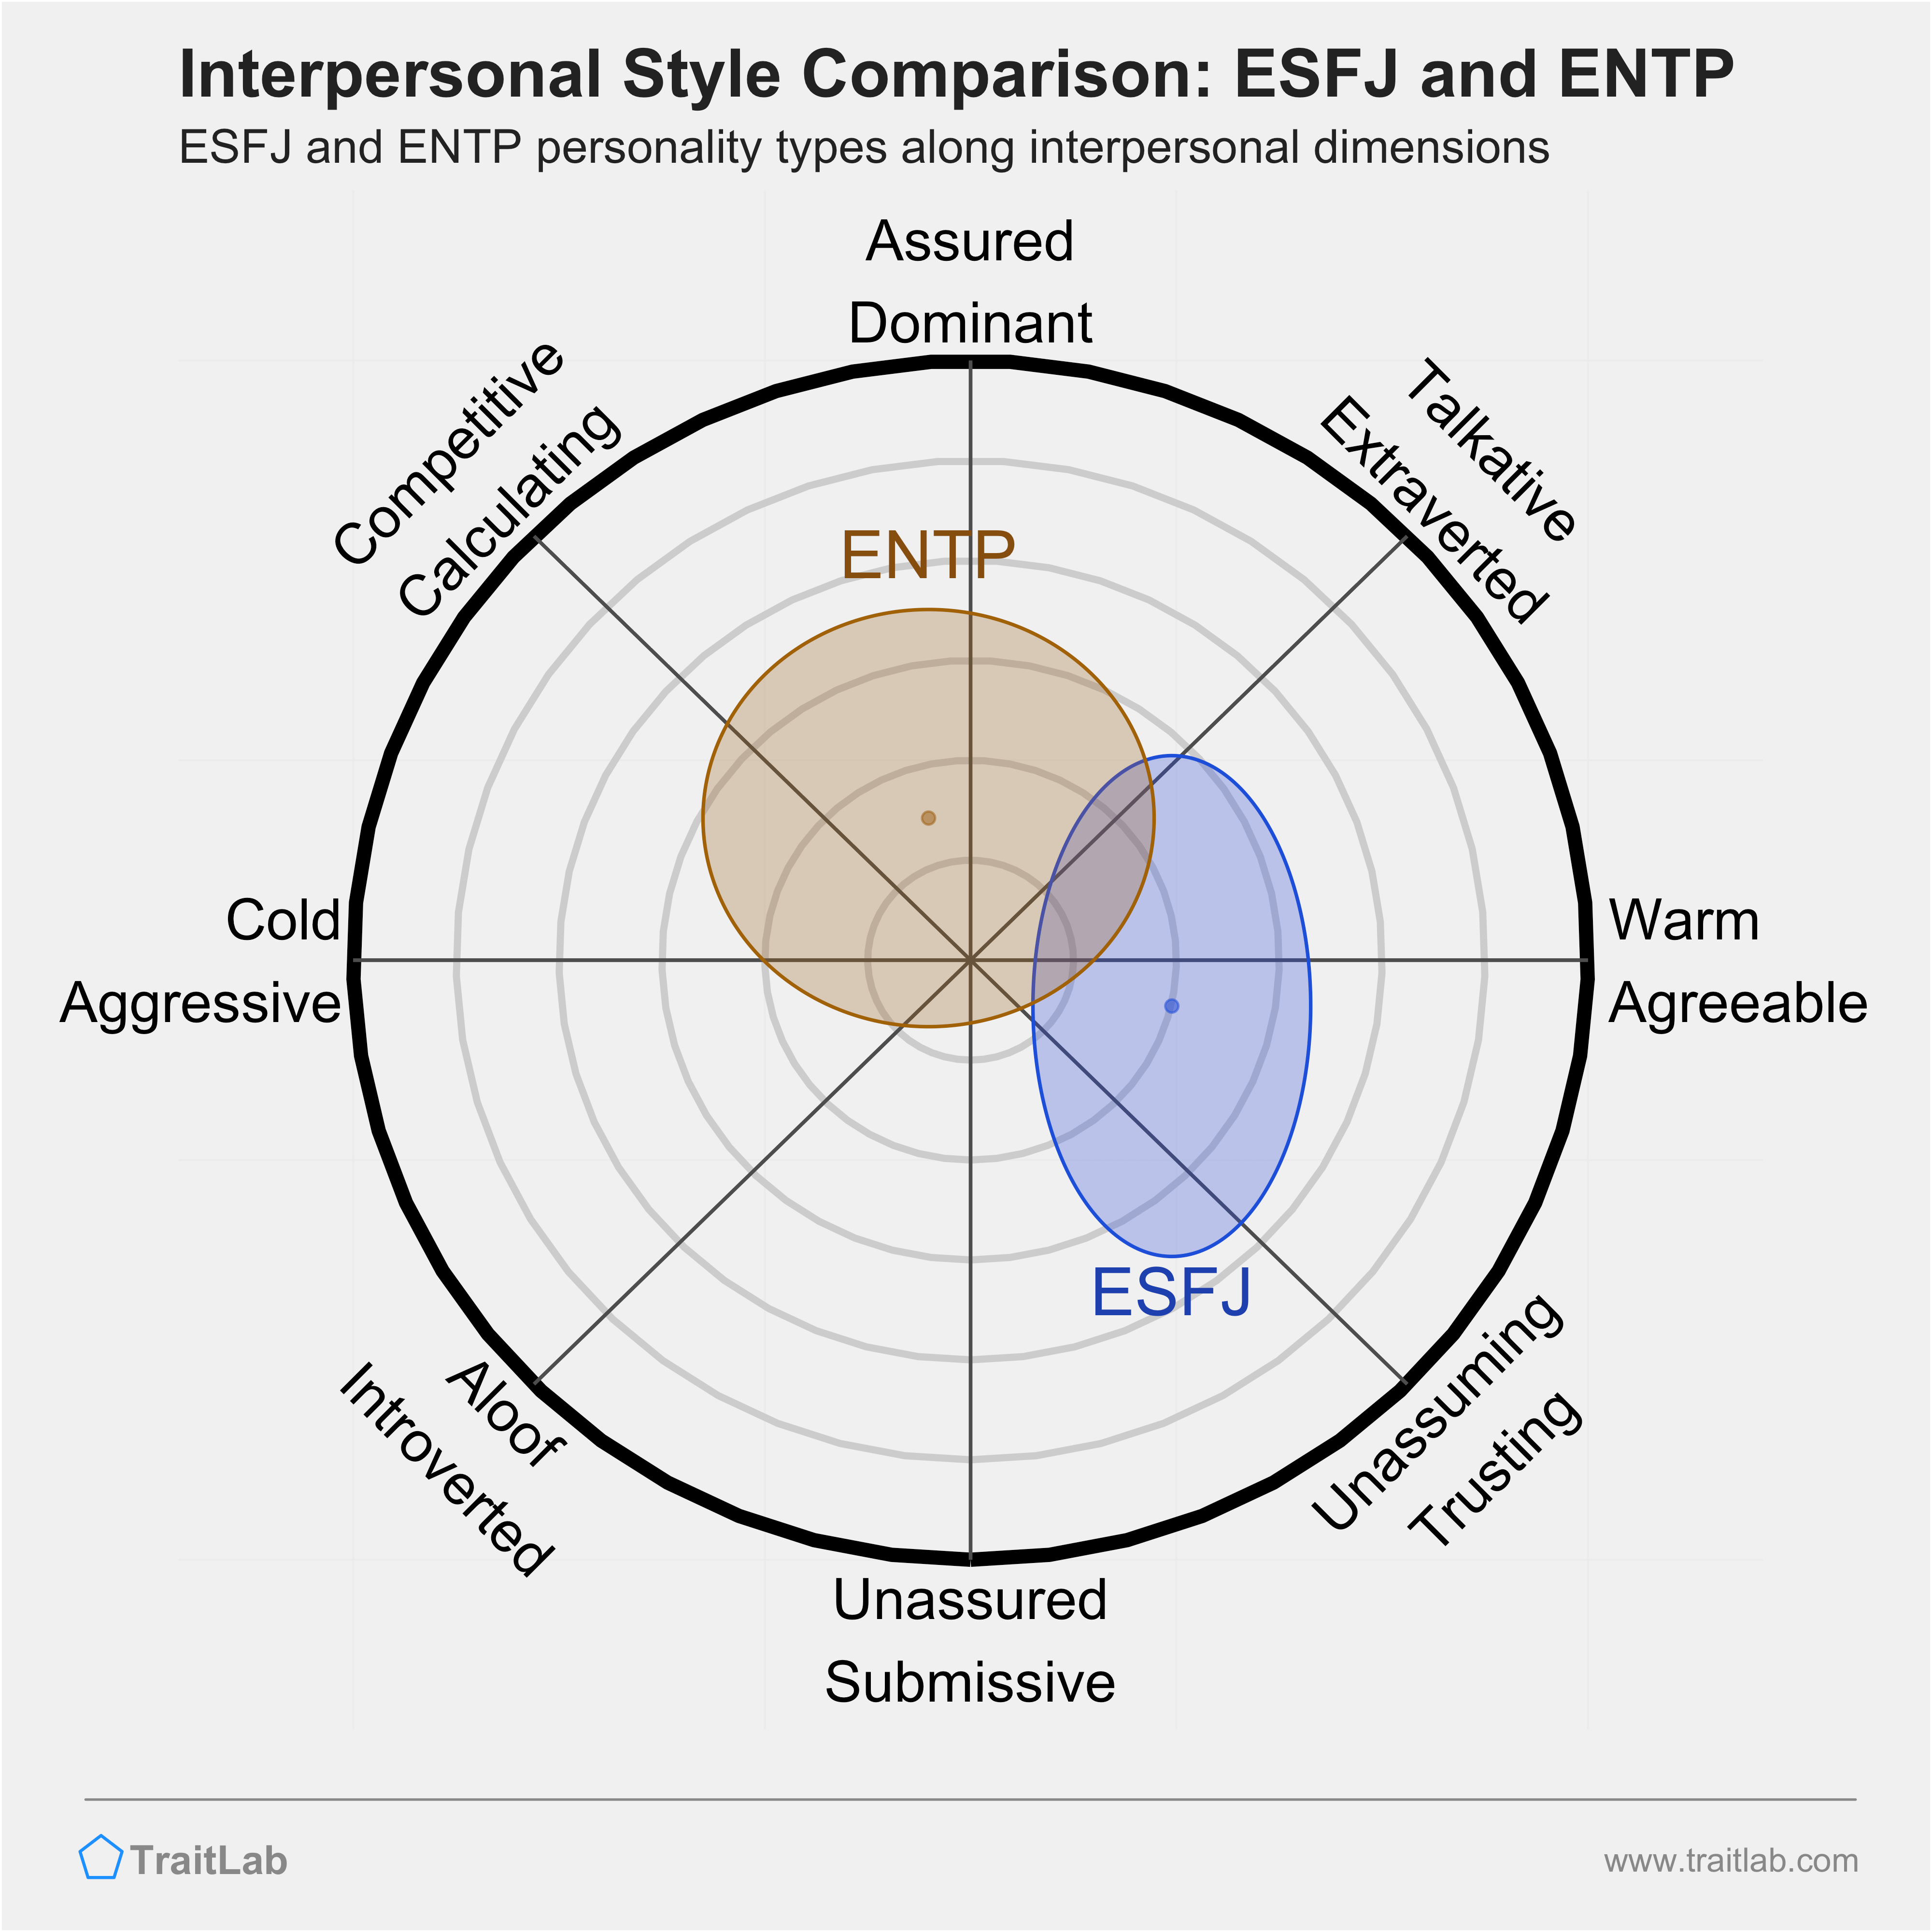 ESFJ and ENTP comparison across interpersonal dimensions